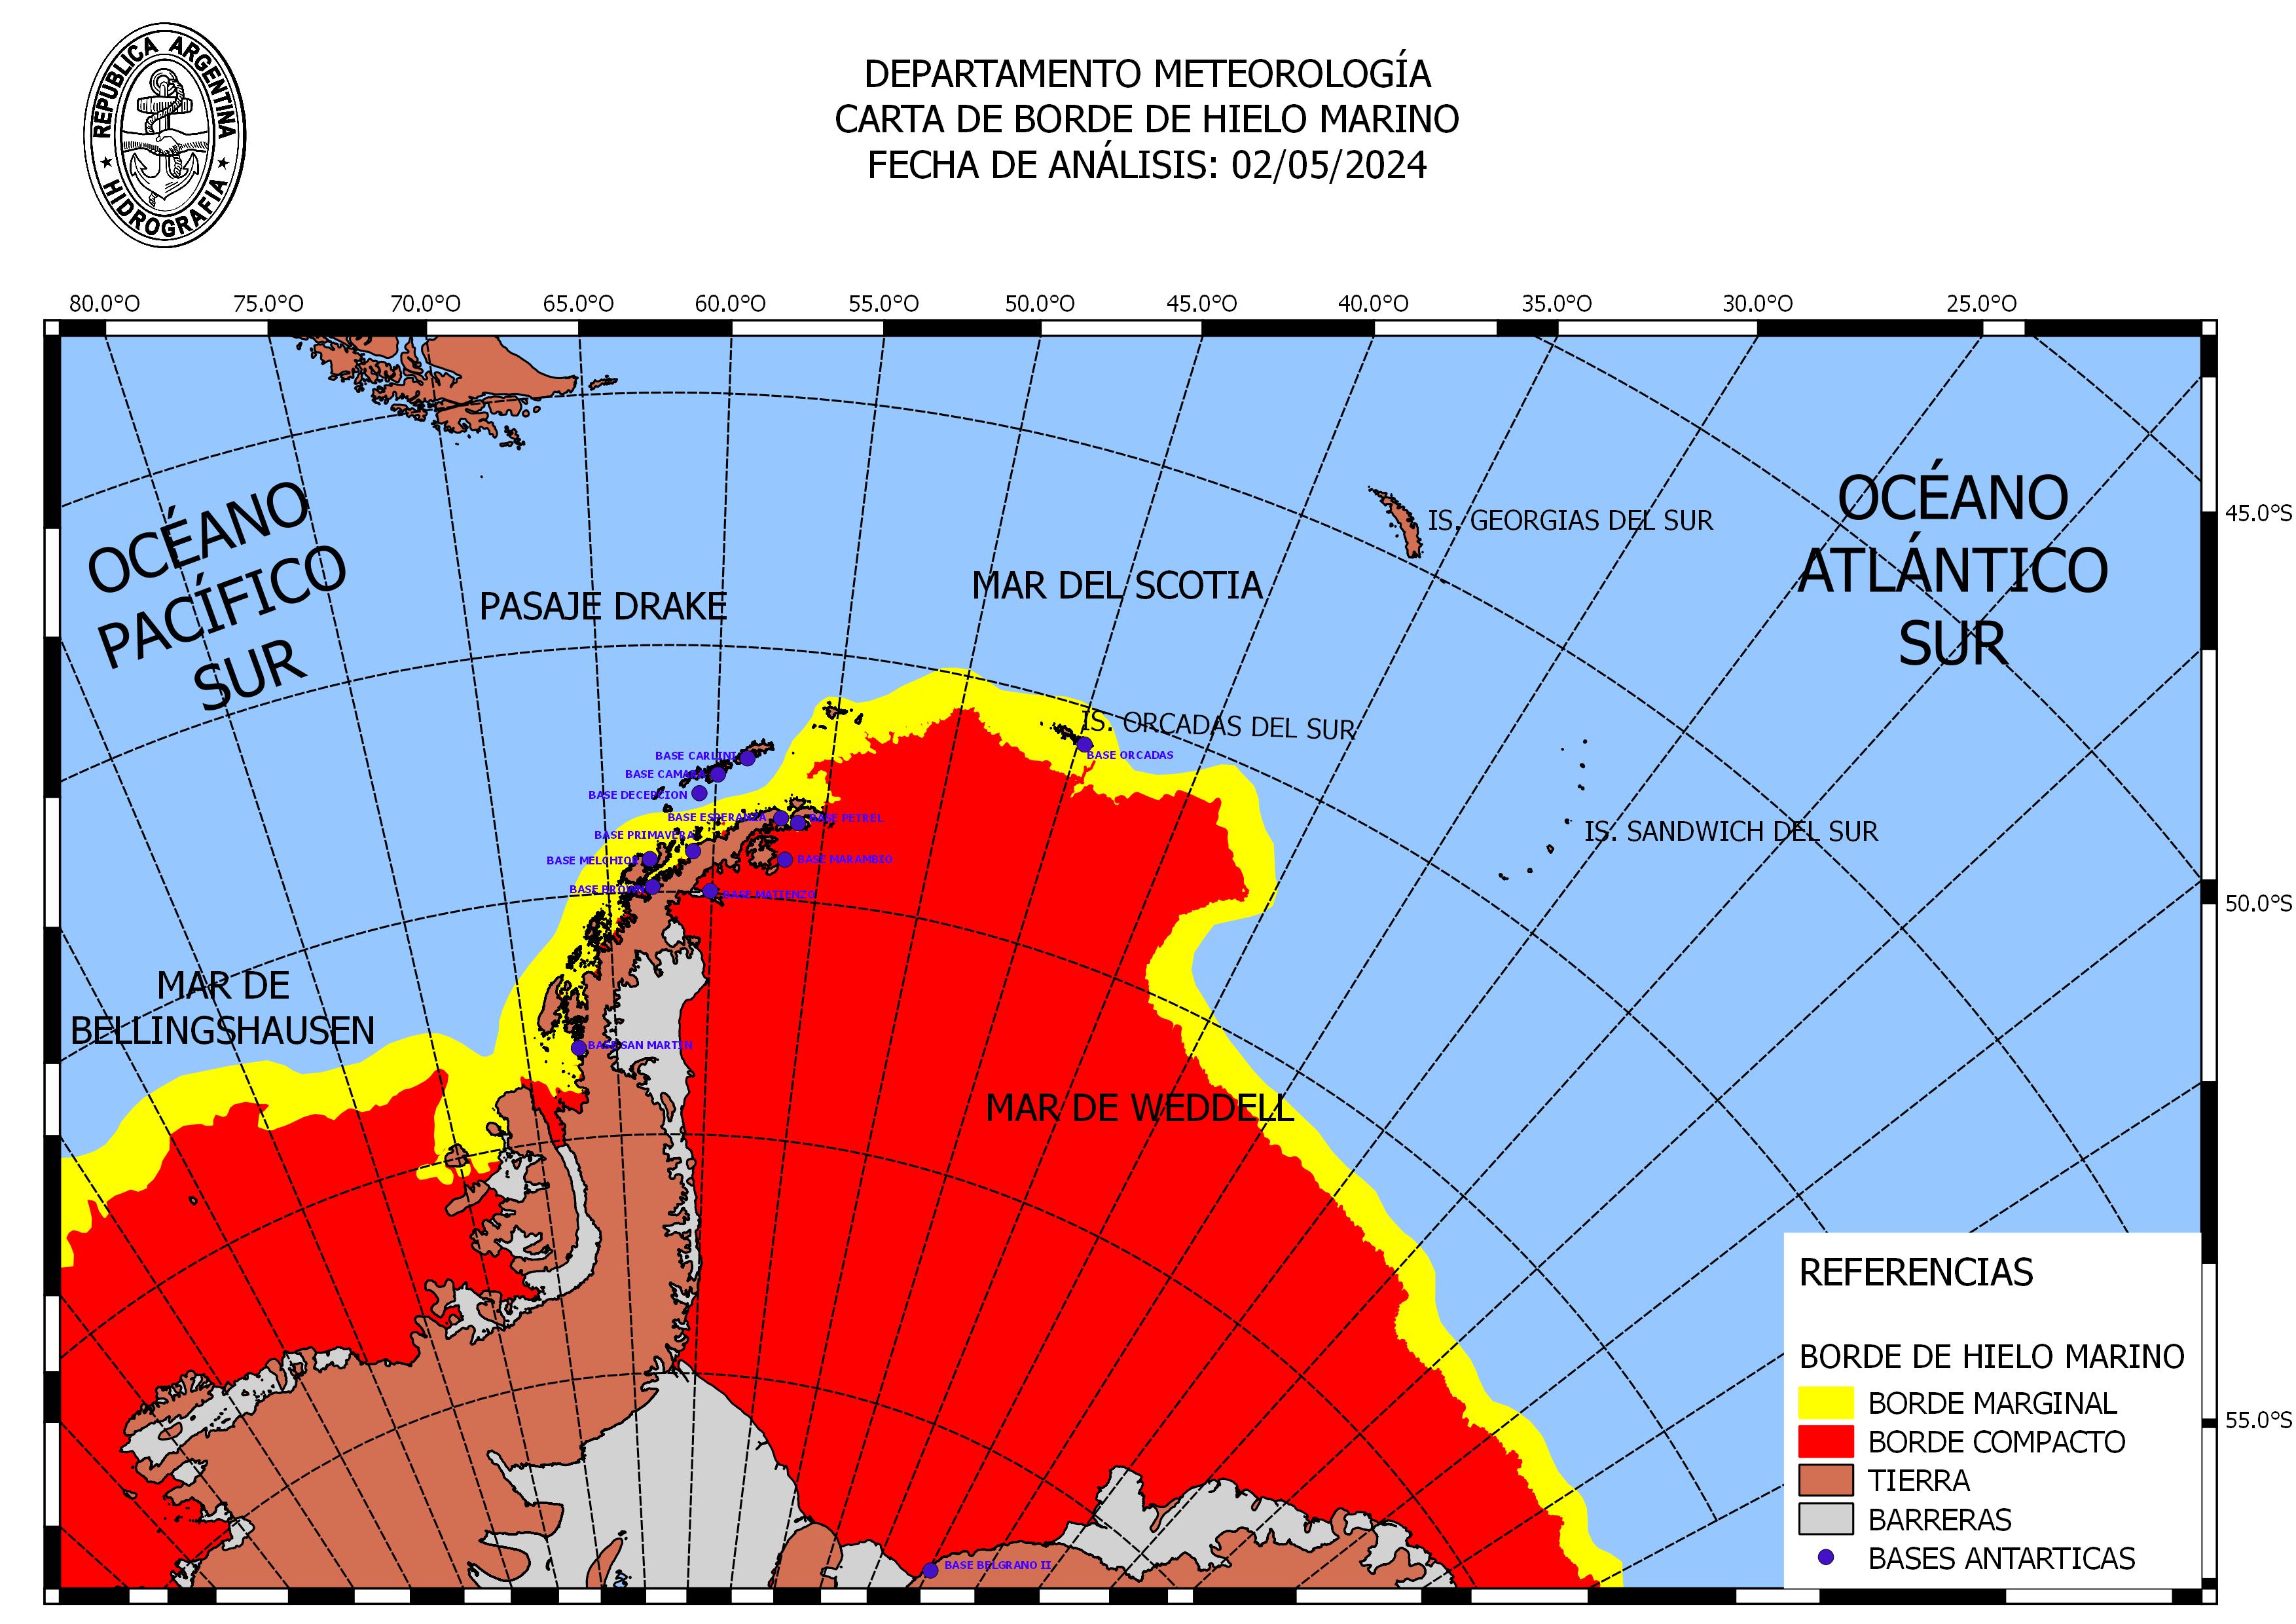 Southern Sheet North Atlantic Ocean NGA Chart 120